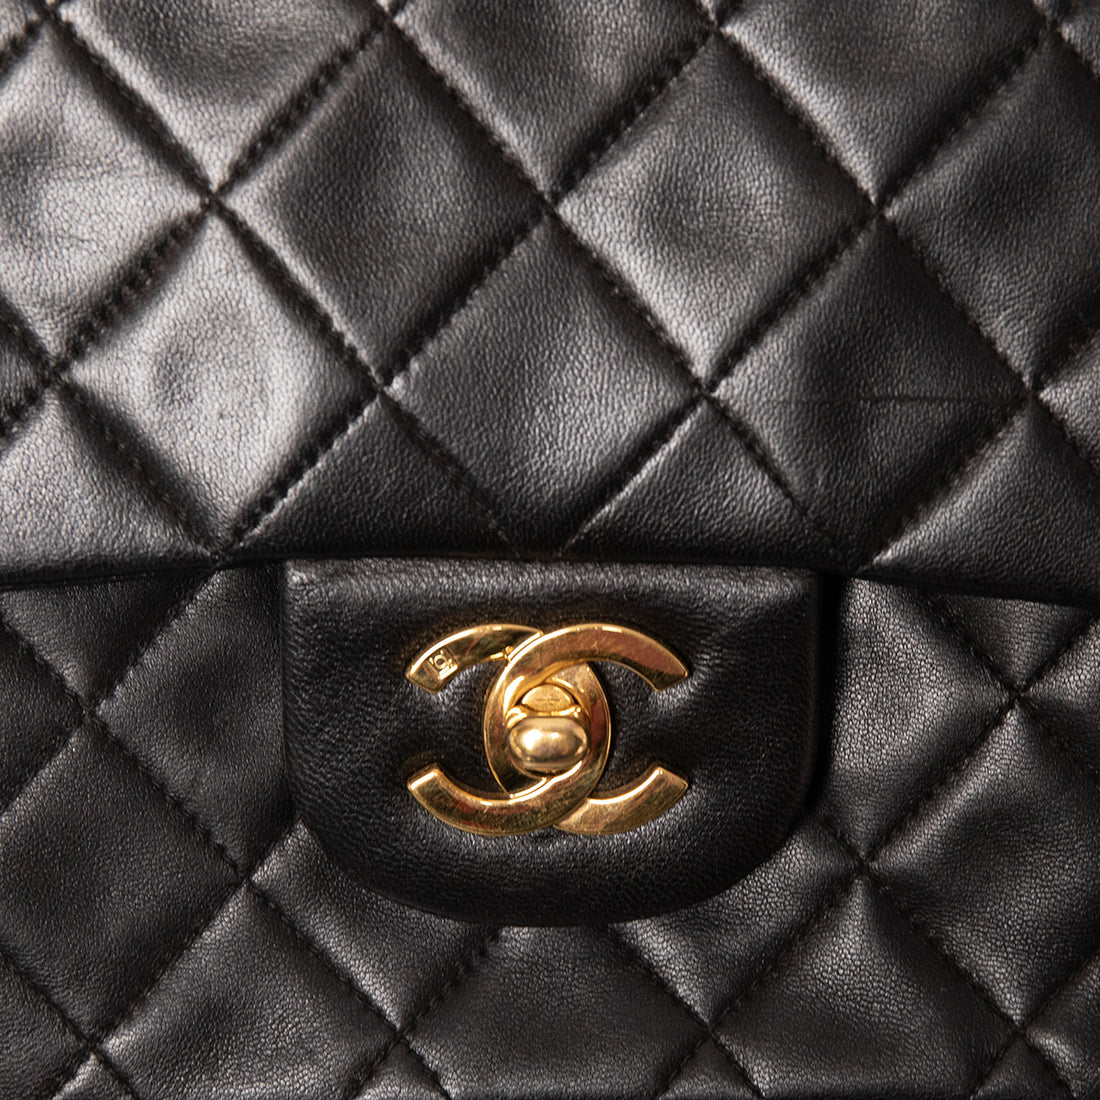 Chanel Classic Matelassé Flap Bag